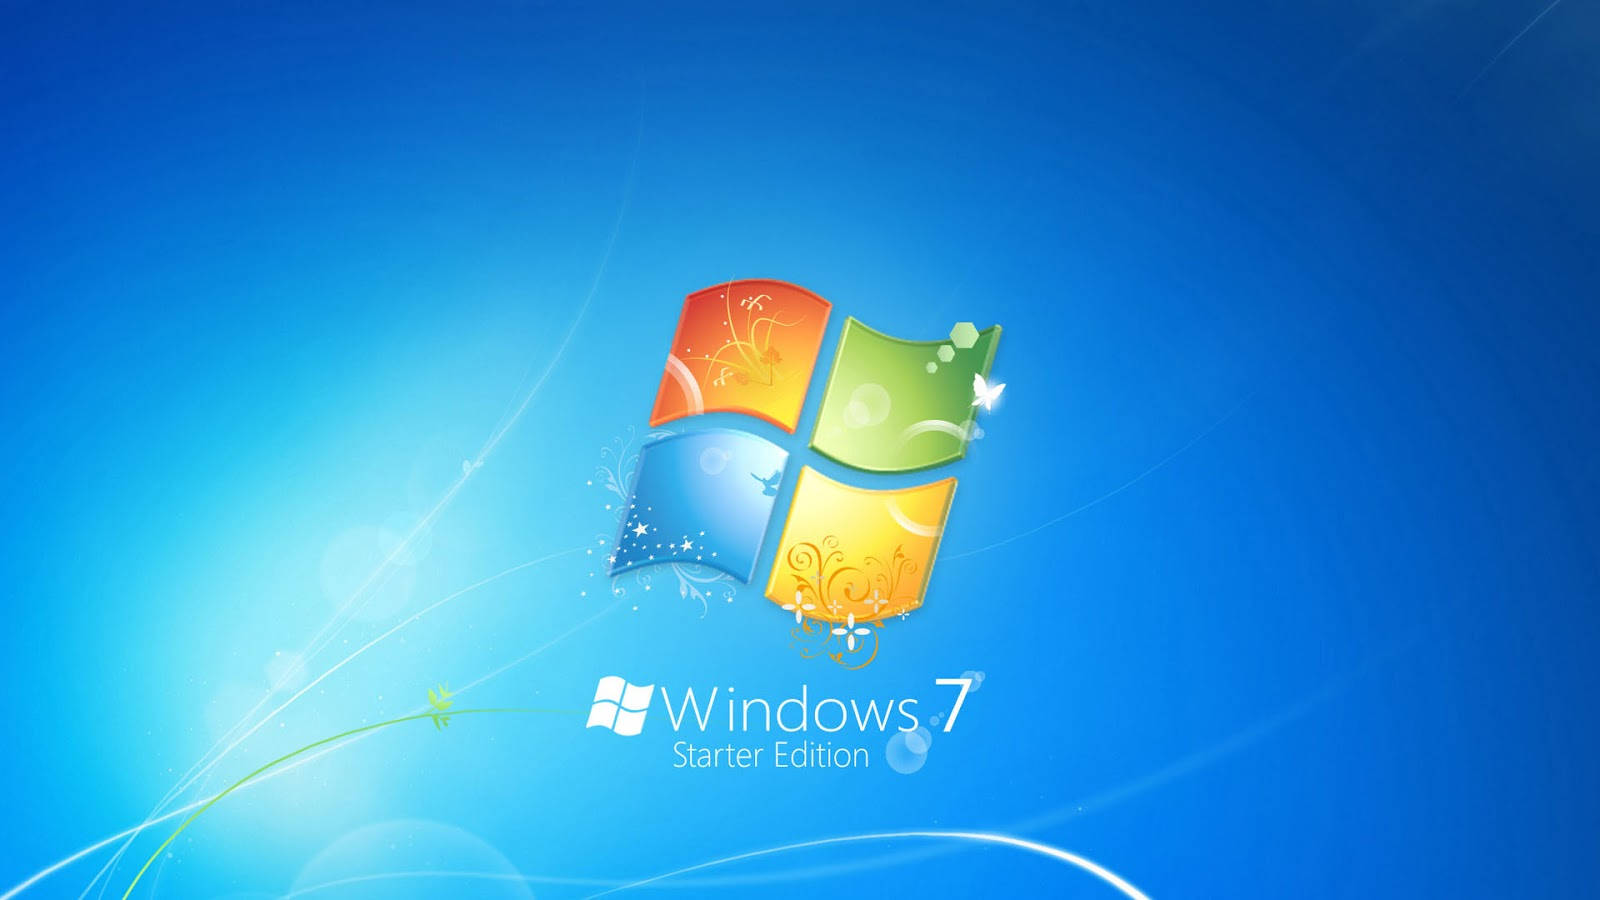 Hd Windows 7 Blue Artistic Screen